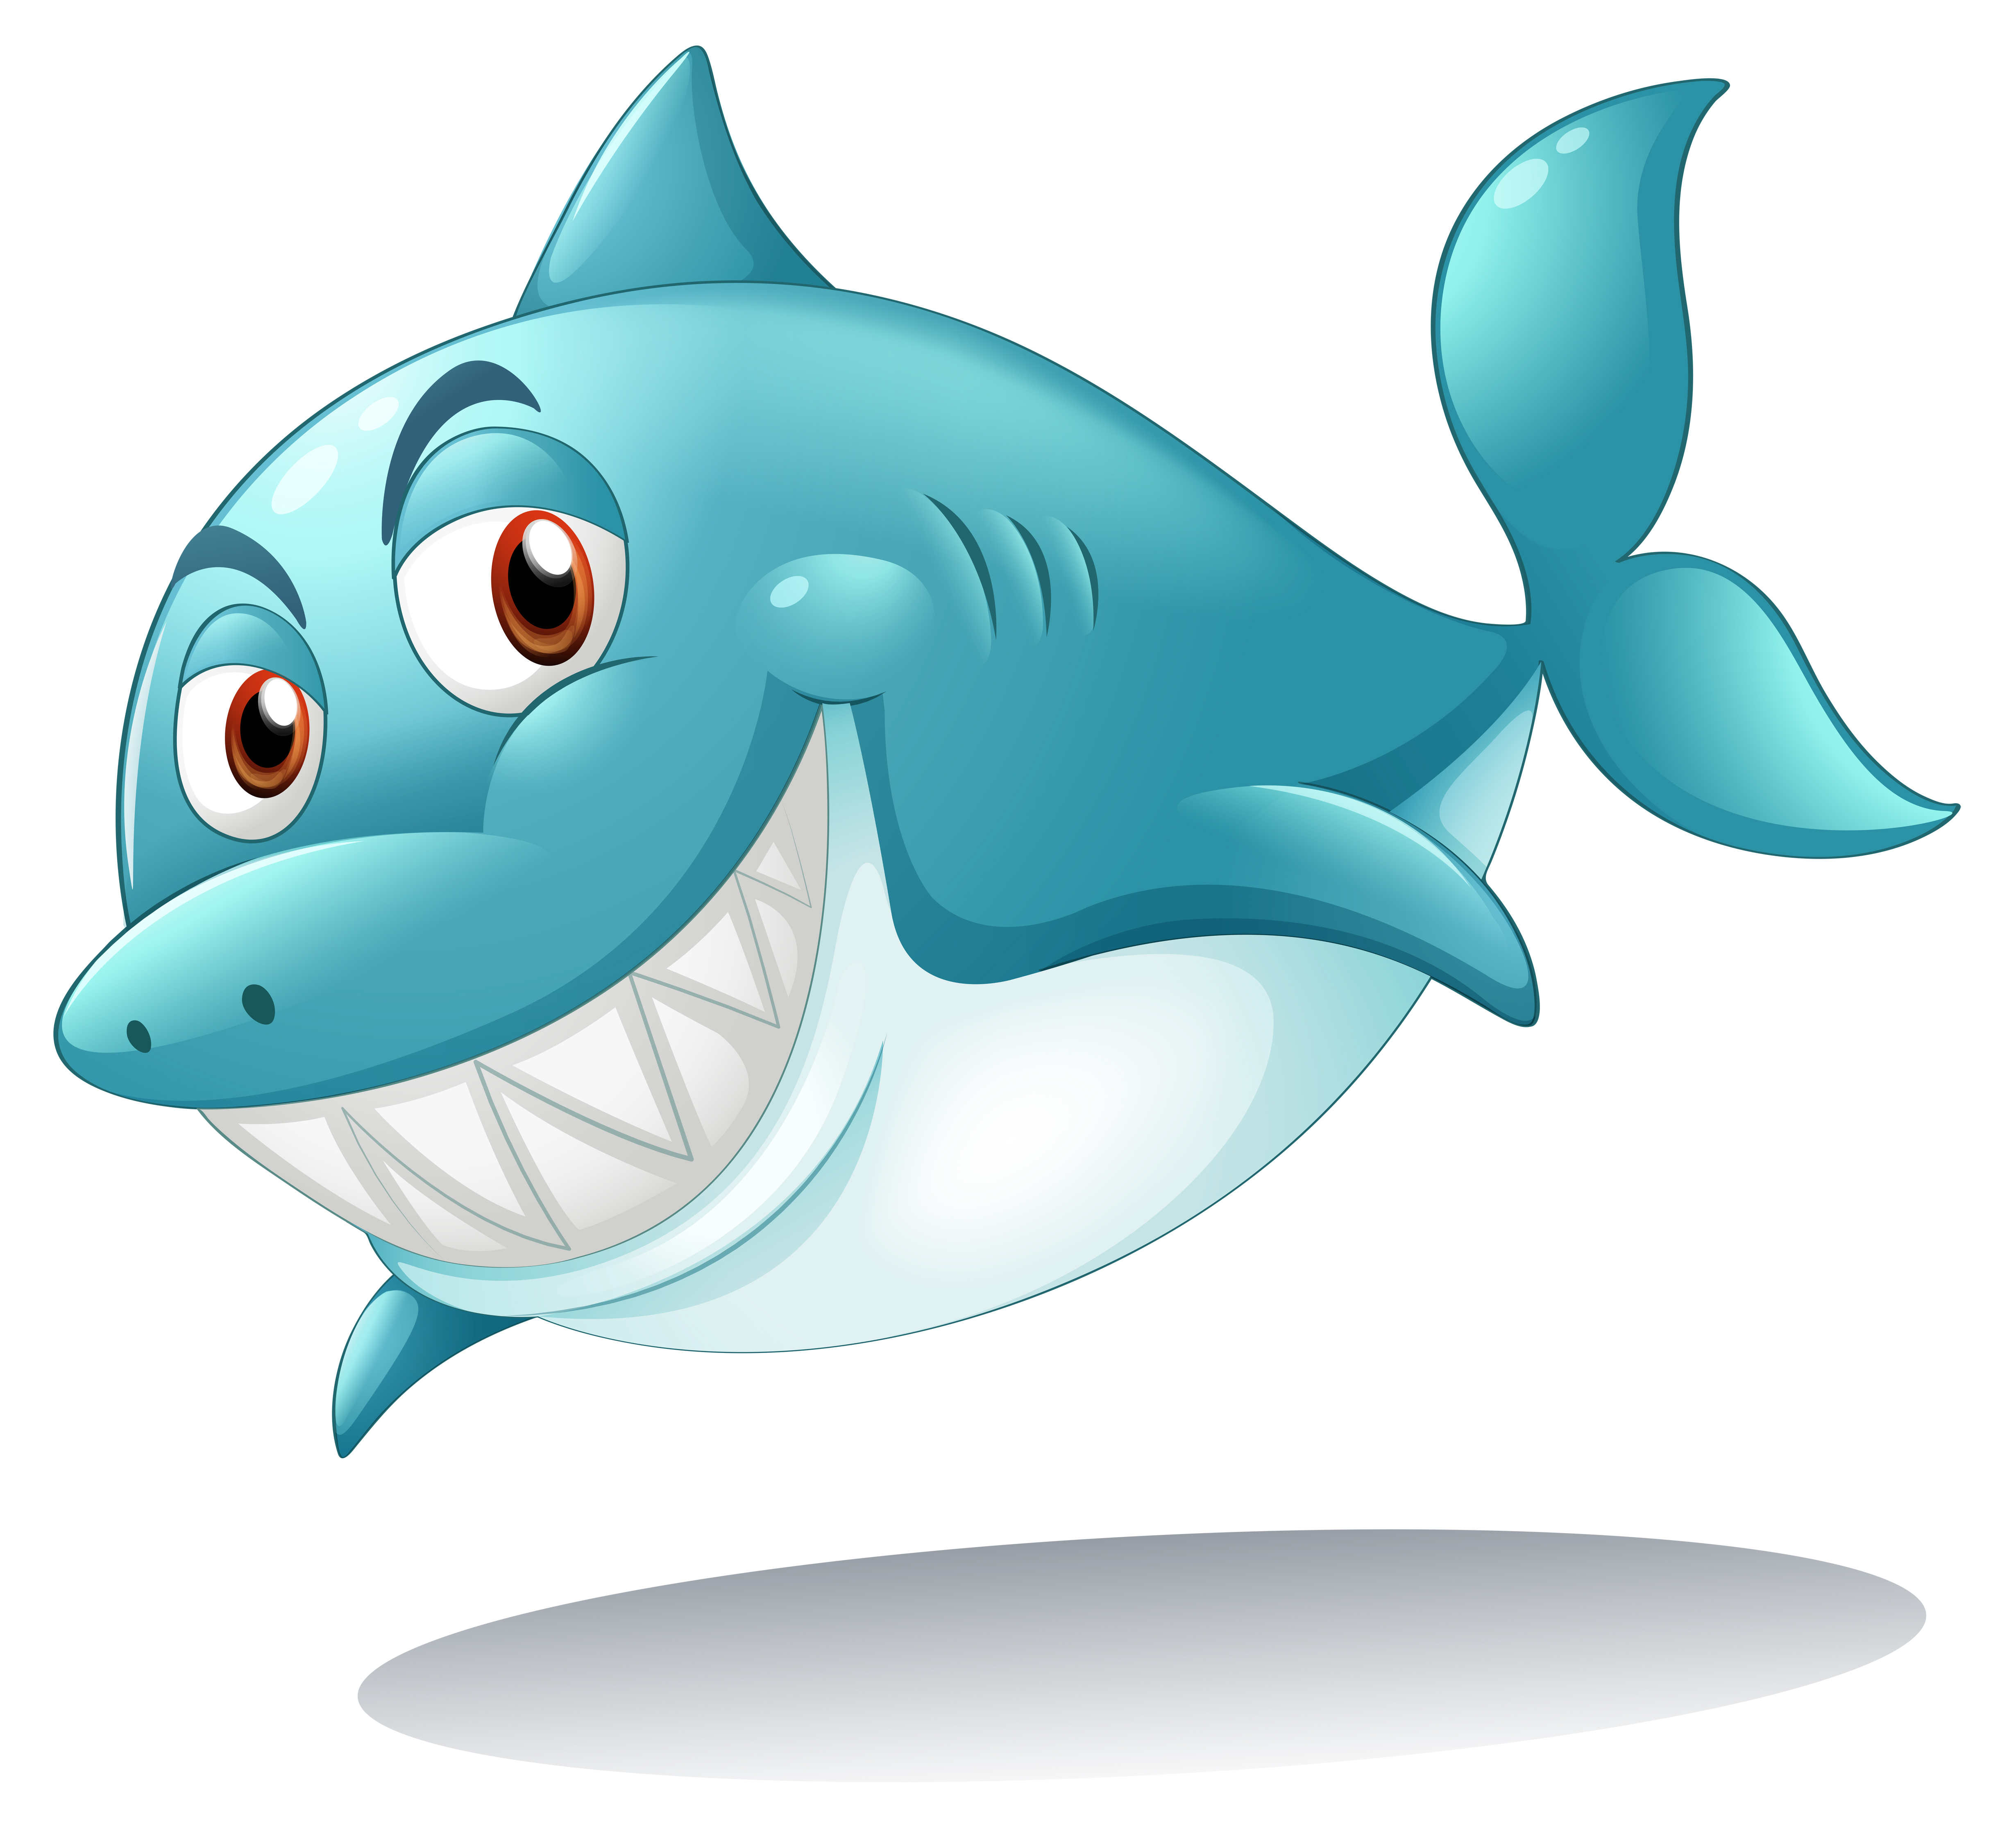 Download Smiling Shark Free Vector Art - (64 Free Downloads)